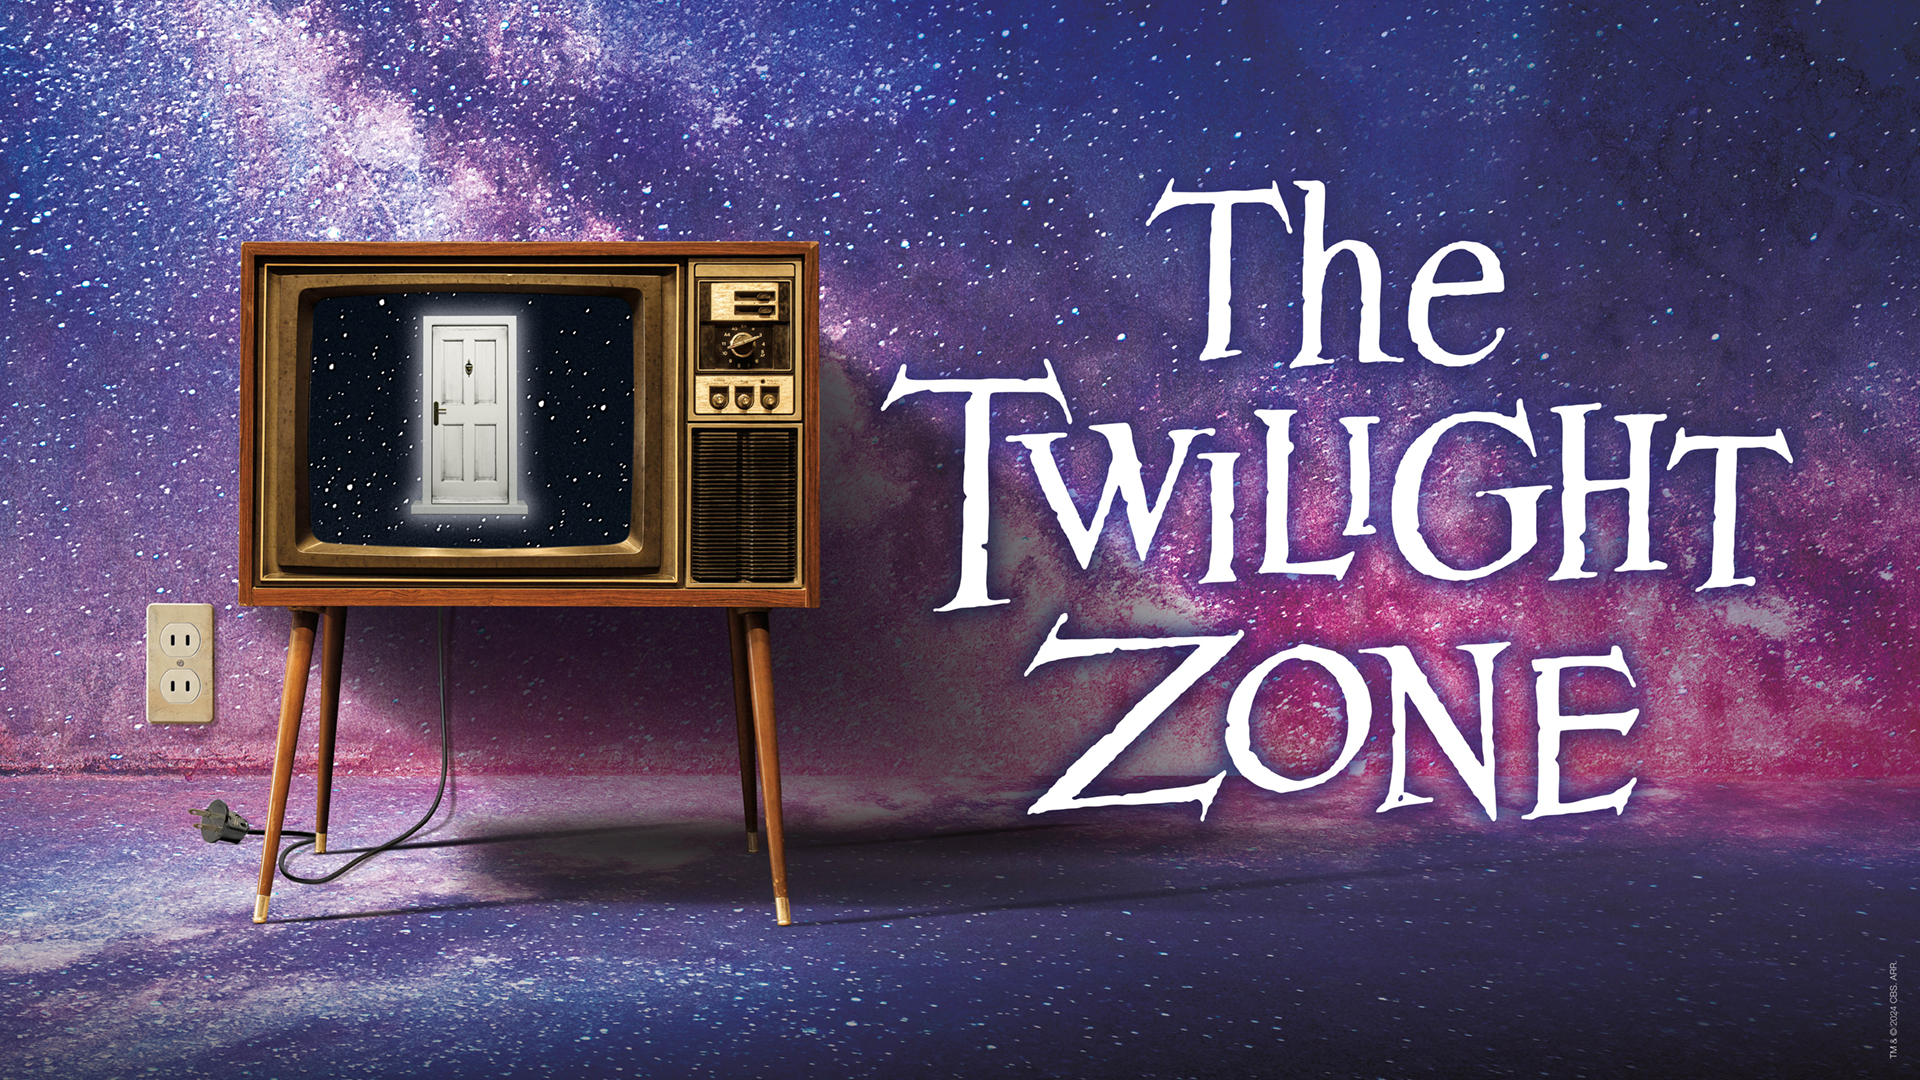 The Twilight Zone - The Citadel Theatre